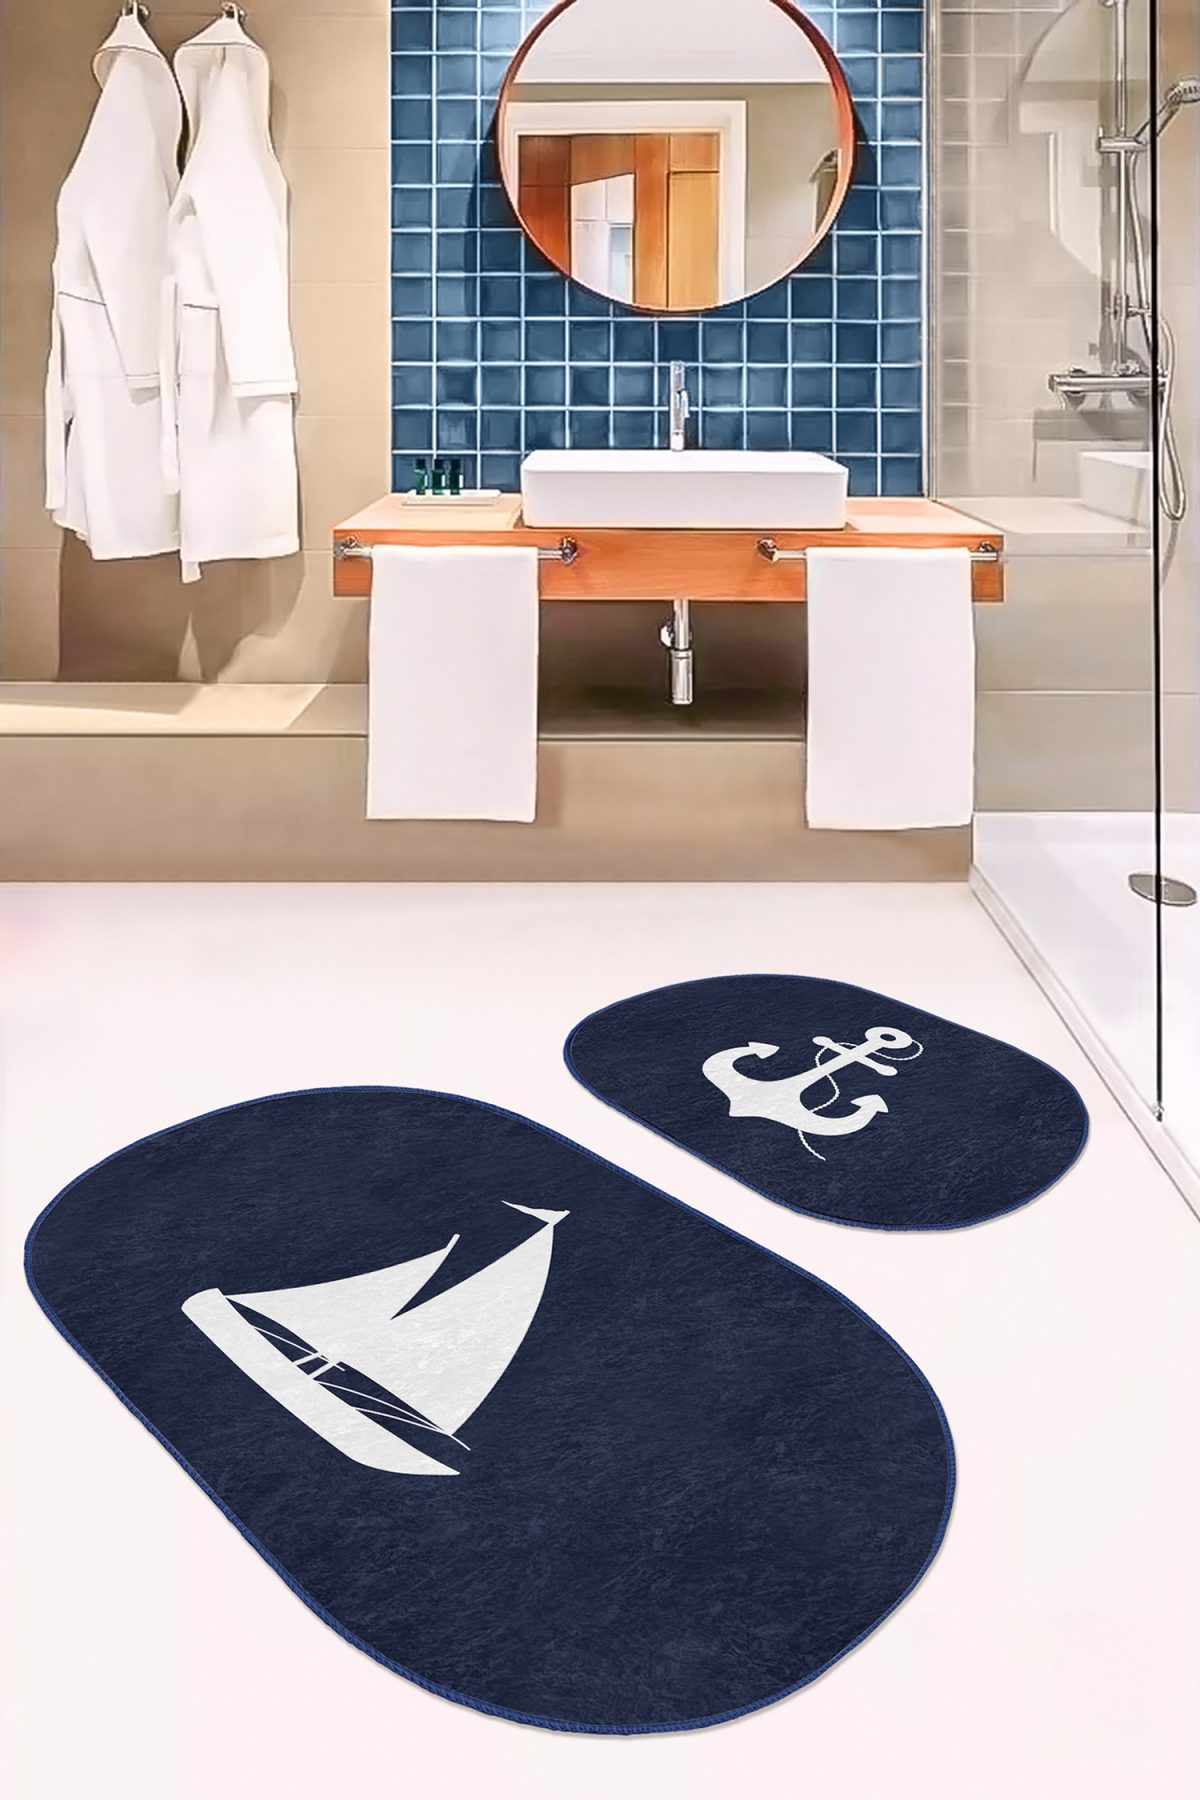 Lacivert Zemin Çapa & Kayık Motifli 2'li Oval Kaymaz Tabanlı Banyo & Mutfak Paspas Takımı Realhomes